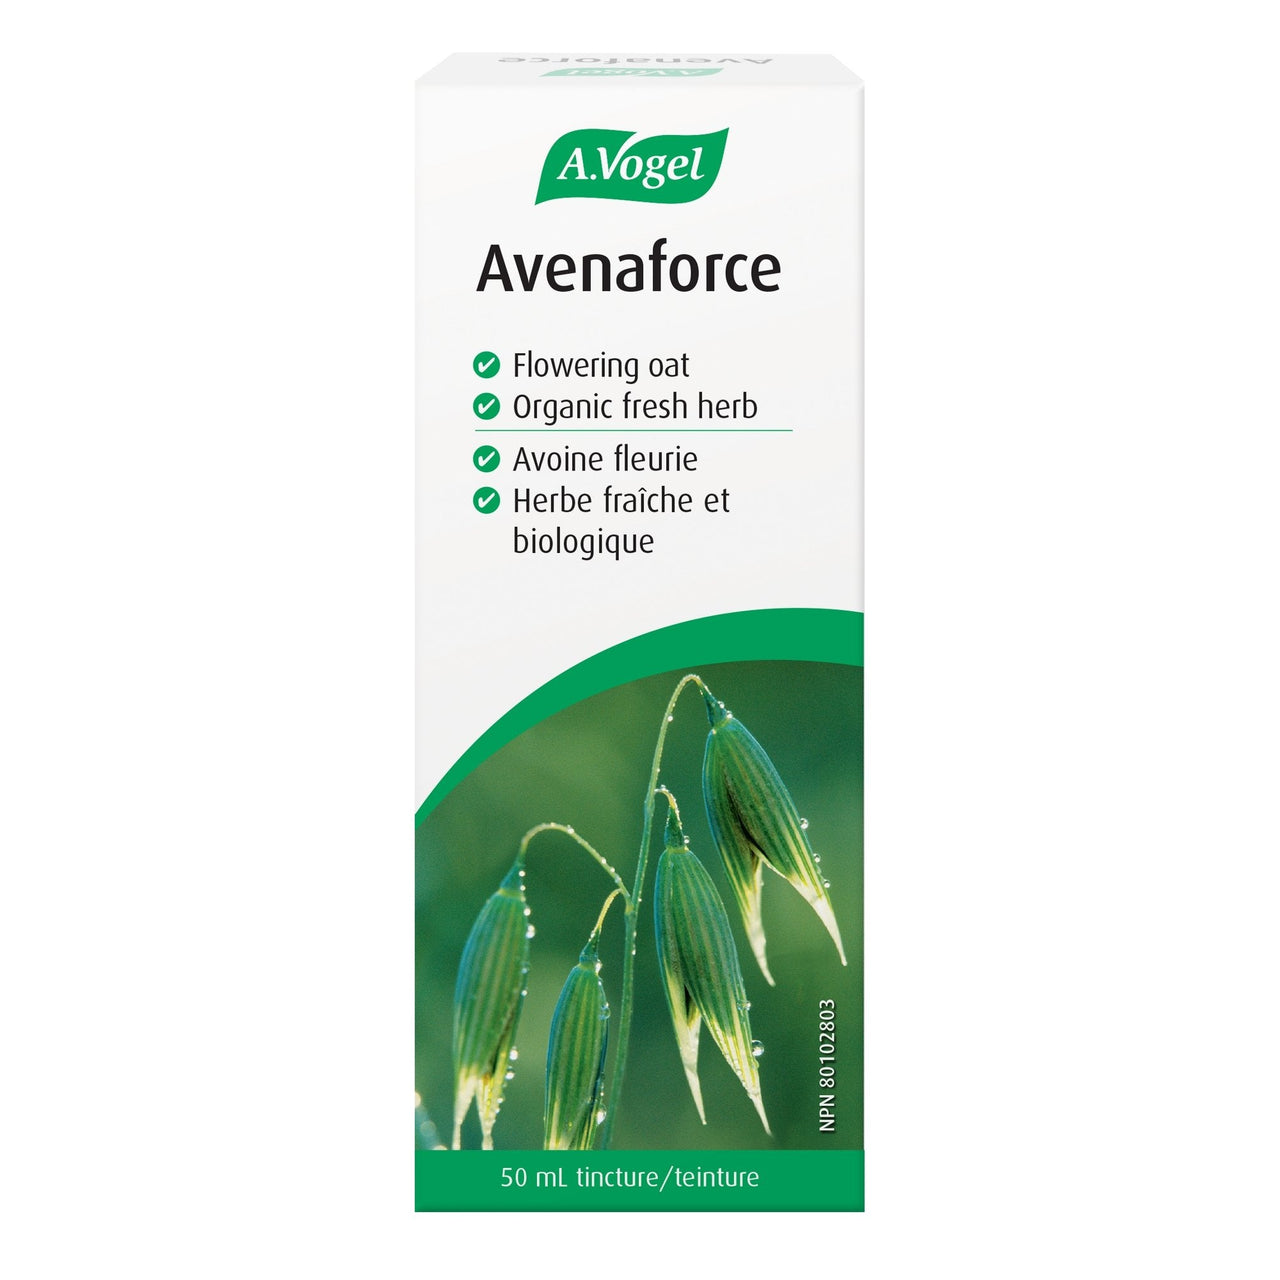 A.Vogel Avenaforce Fresh Avena Sativa Antioxidant Extract 50mL - Nutrition Plus